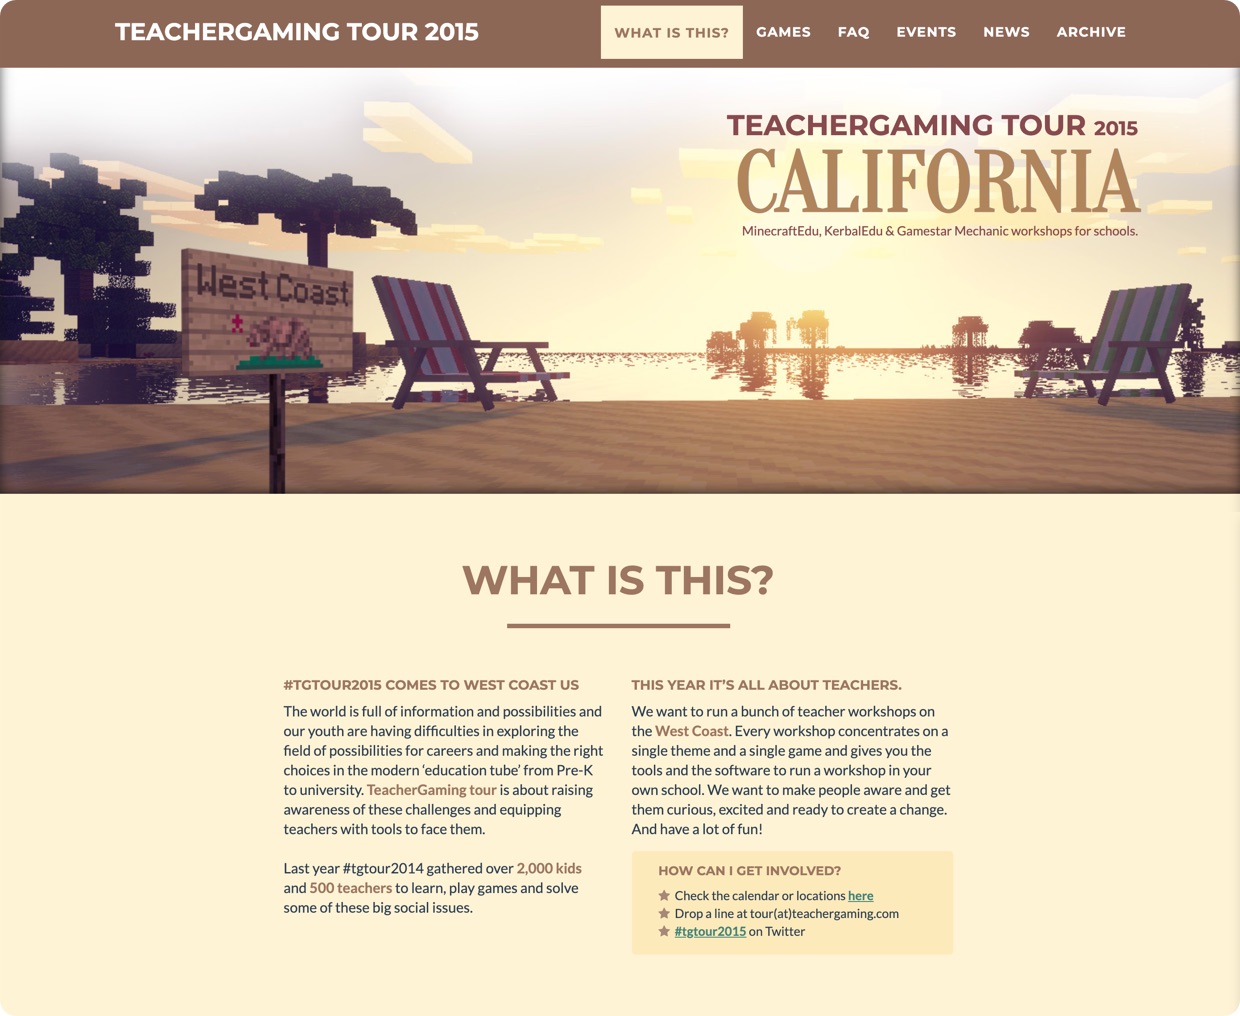 TeacherGaming Tour 2015 Website Cover Image